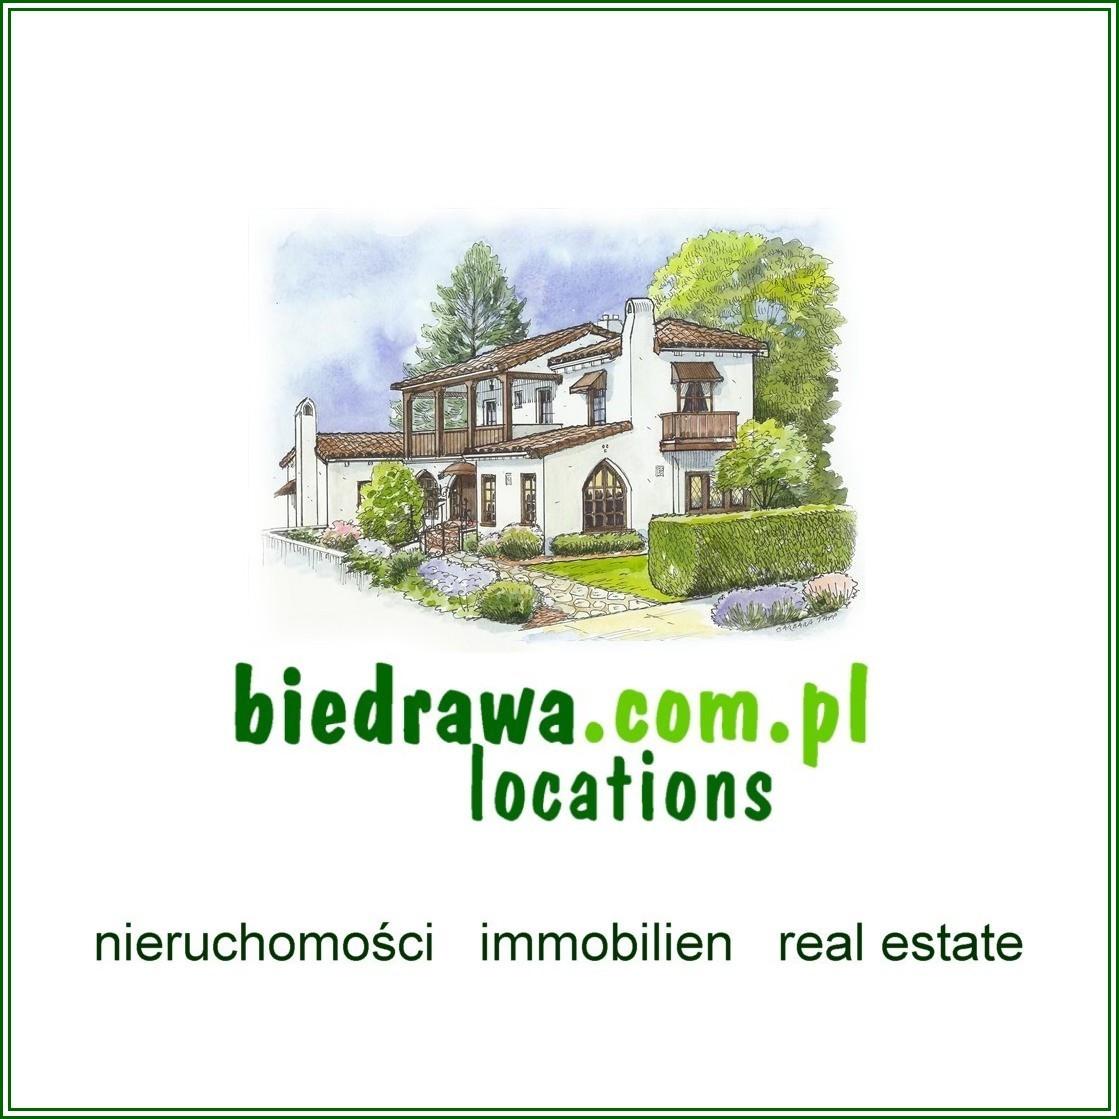 Logo biedrawa.com.pl locations